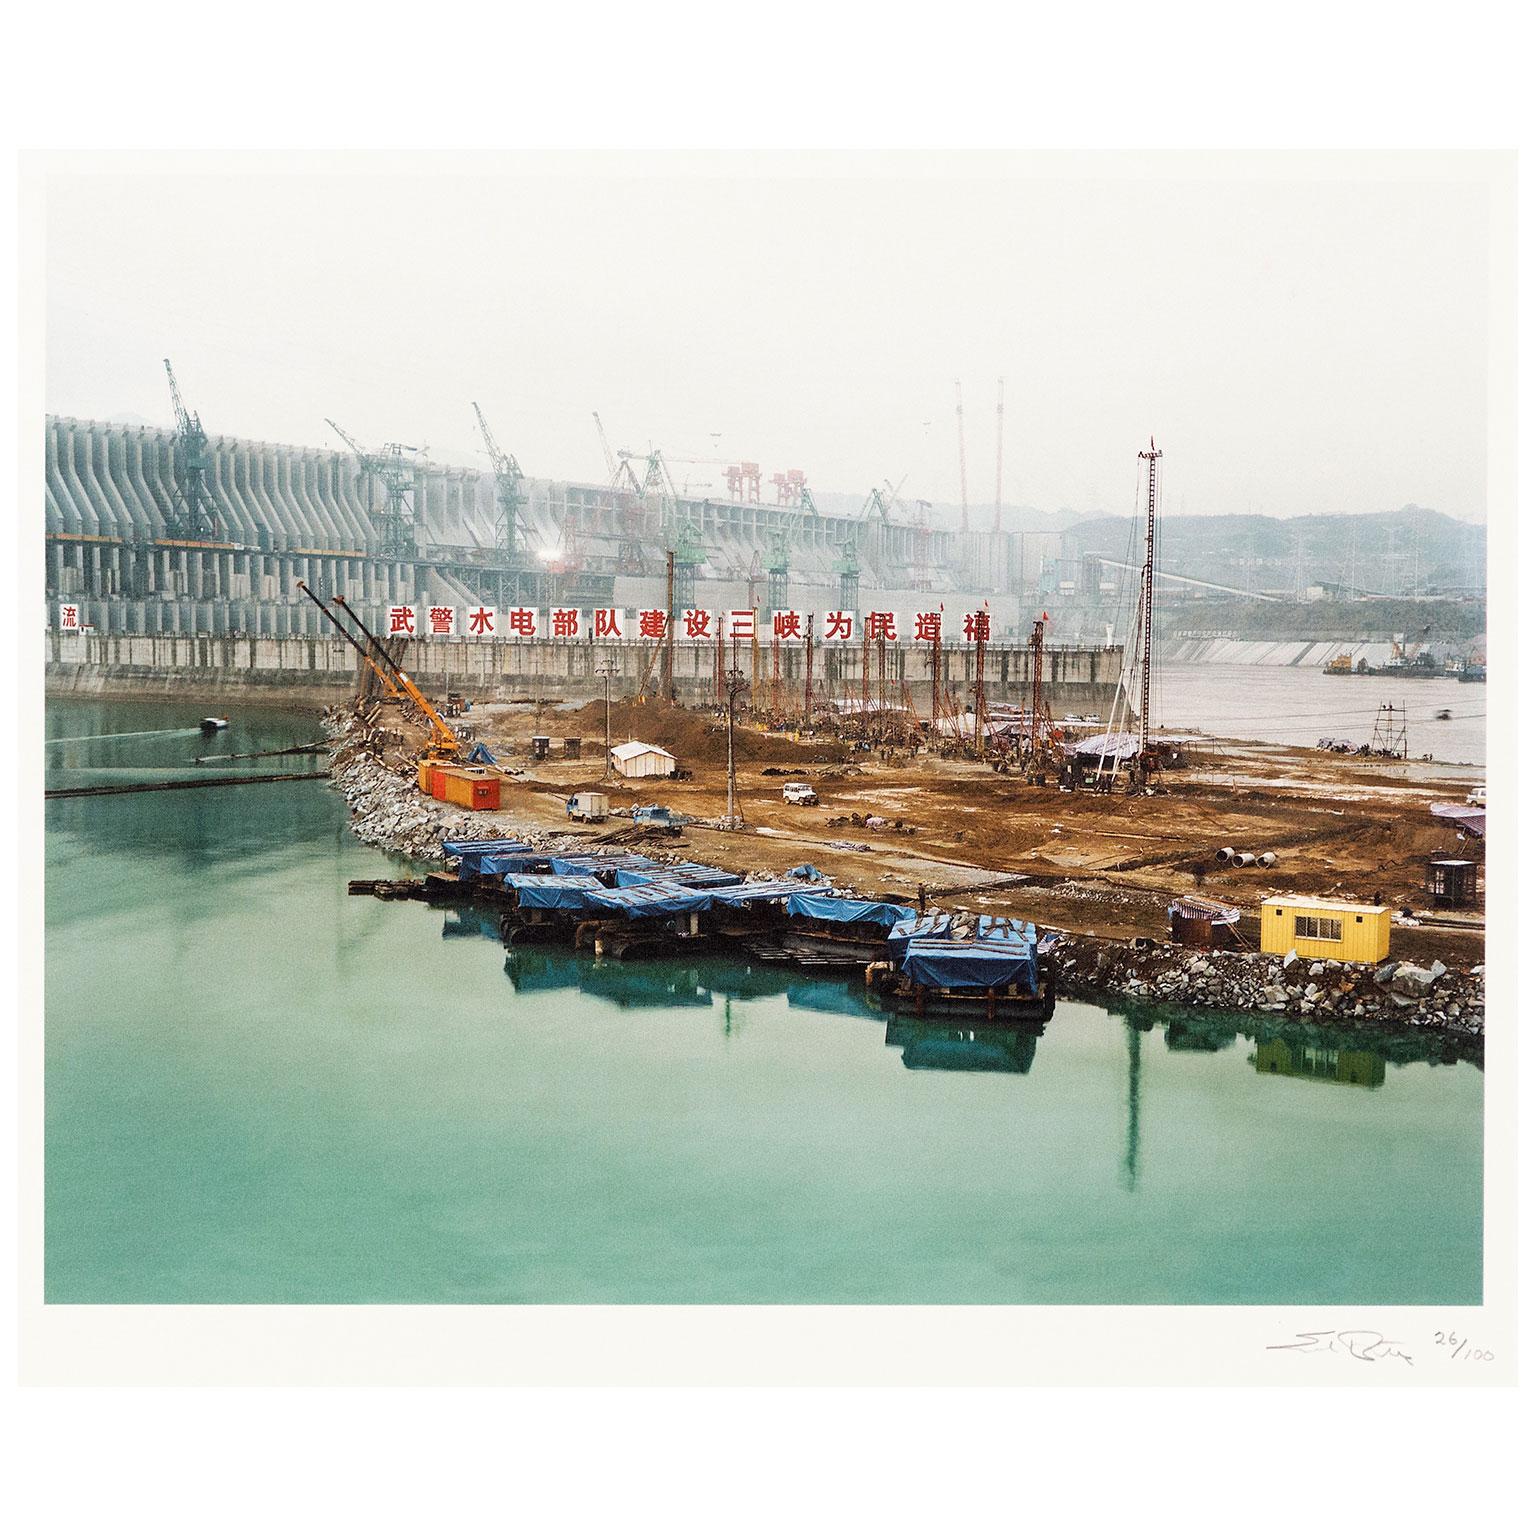 Dam #1, Yengtze River, China - Photograph by Edward Burtynsky